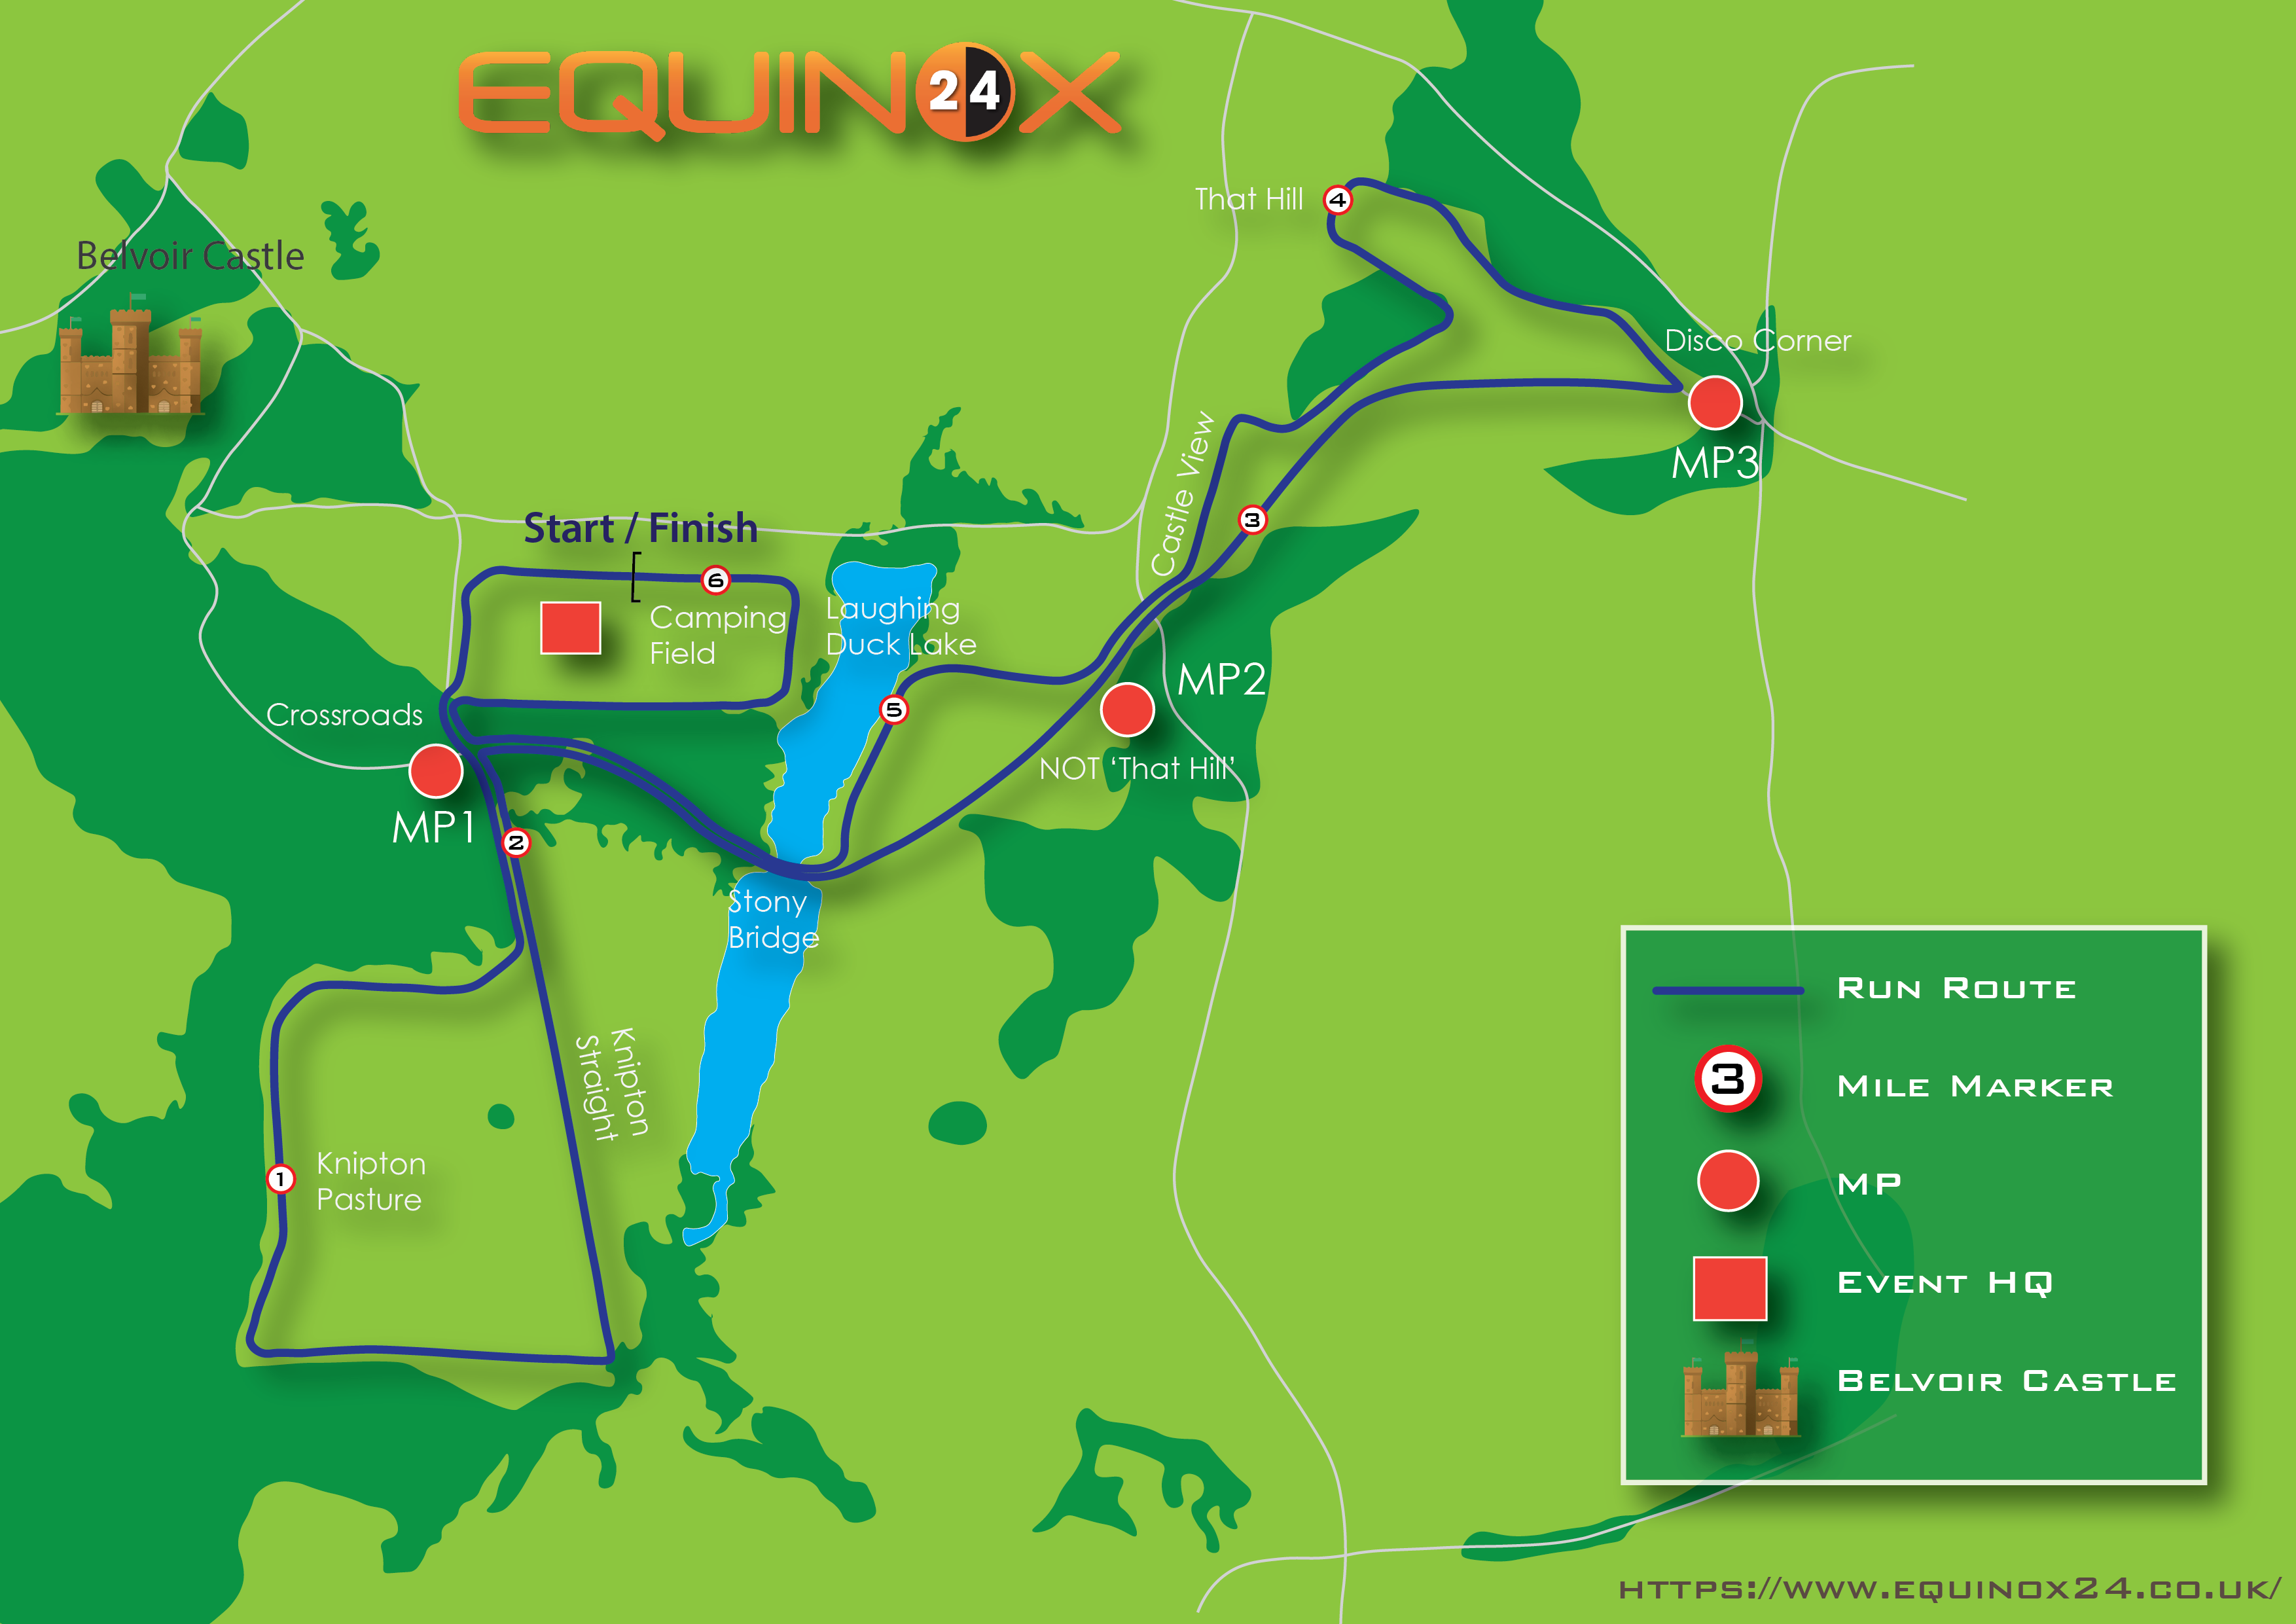 Equinox24 course map